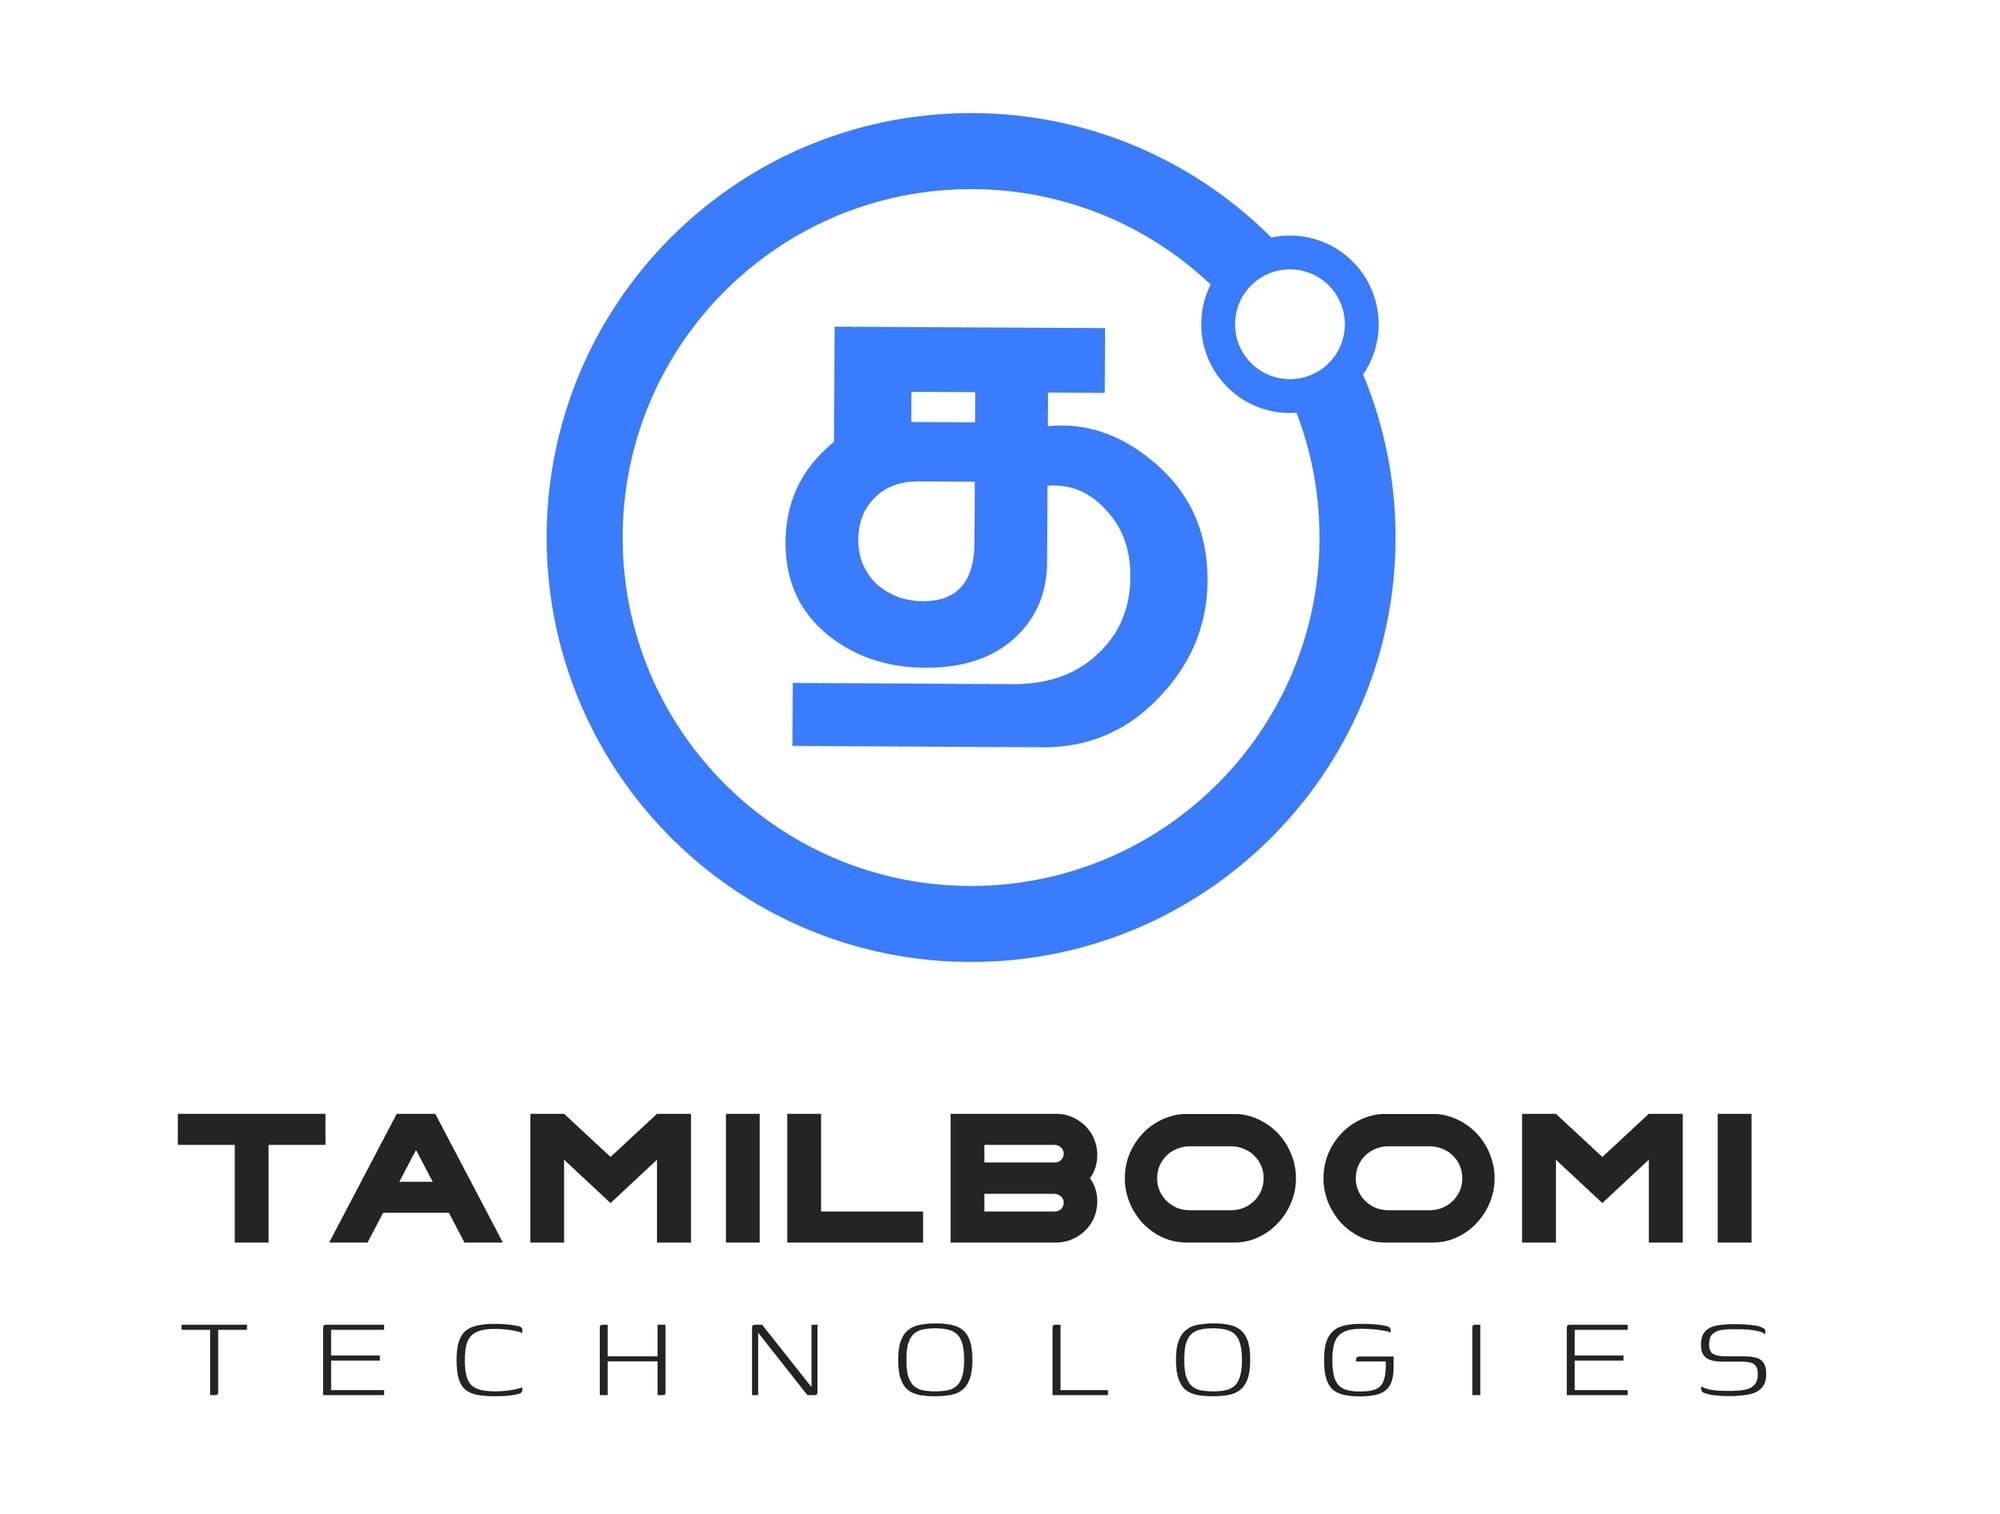 Tamilboomi Technologies